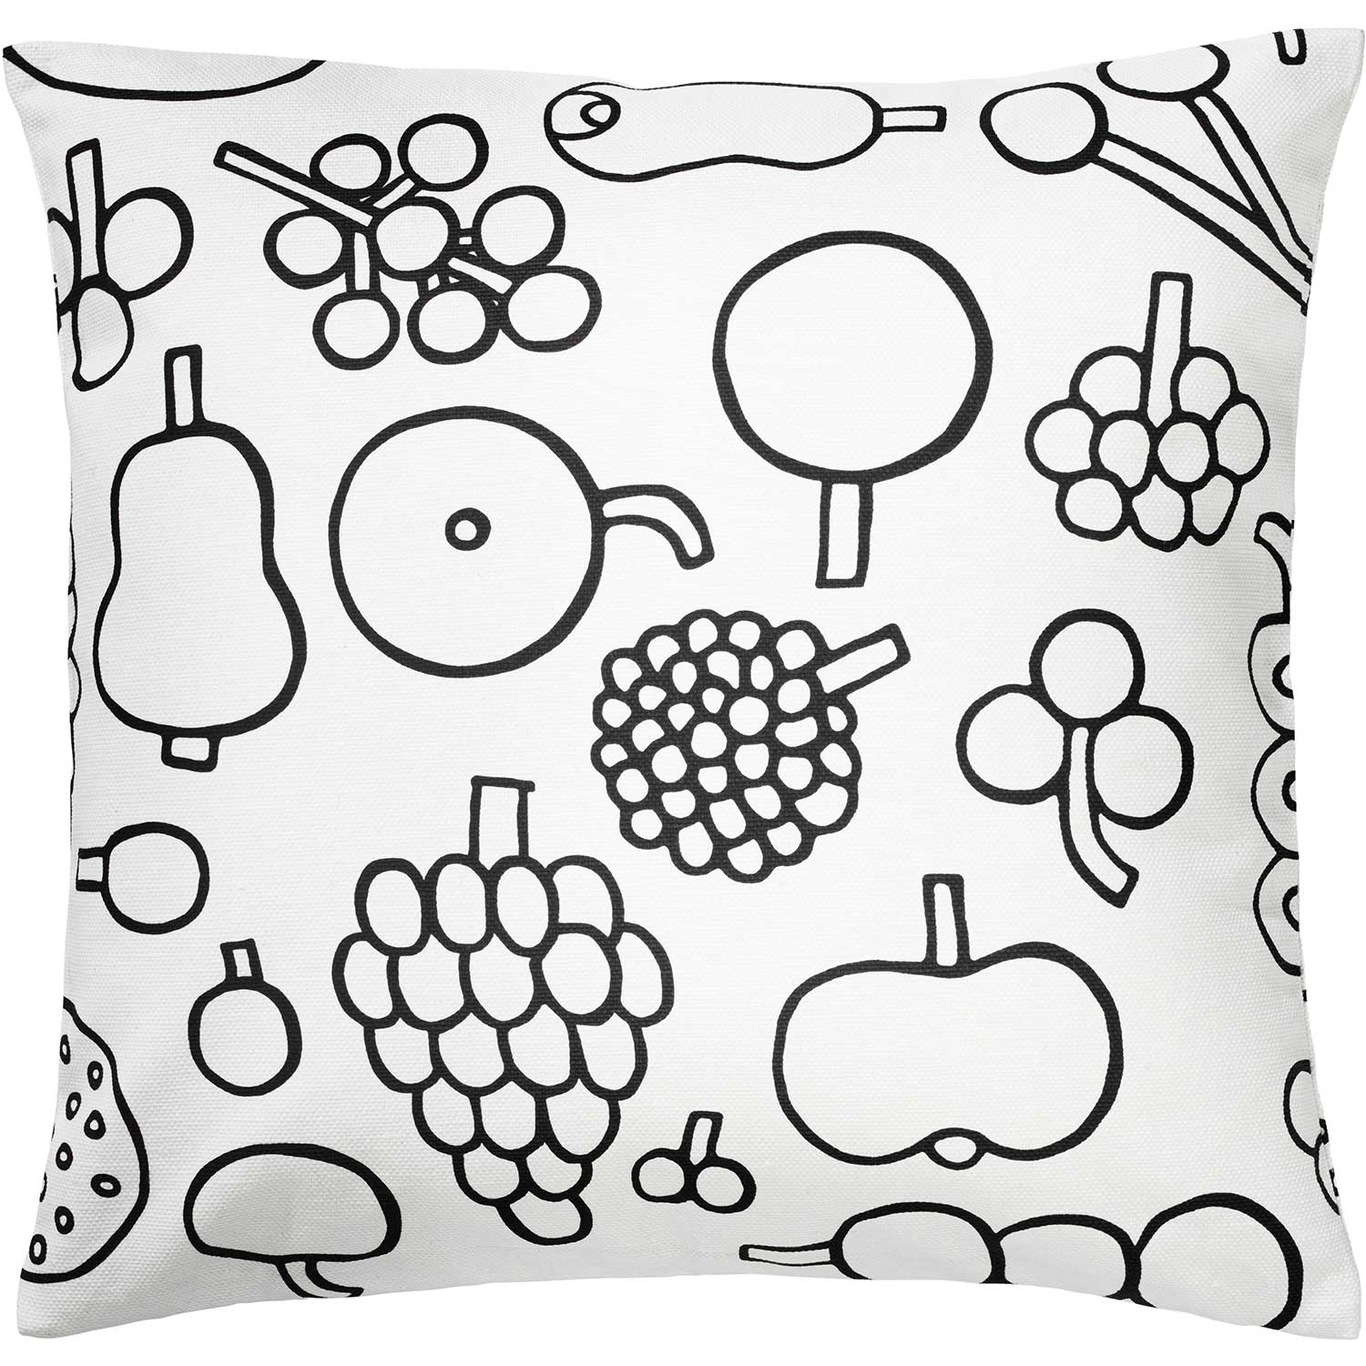 Oiva Toikka Collection Cushion Cover 47x47 cm, Frutta Black